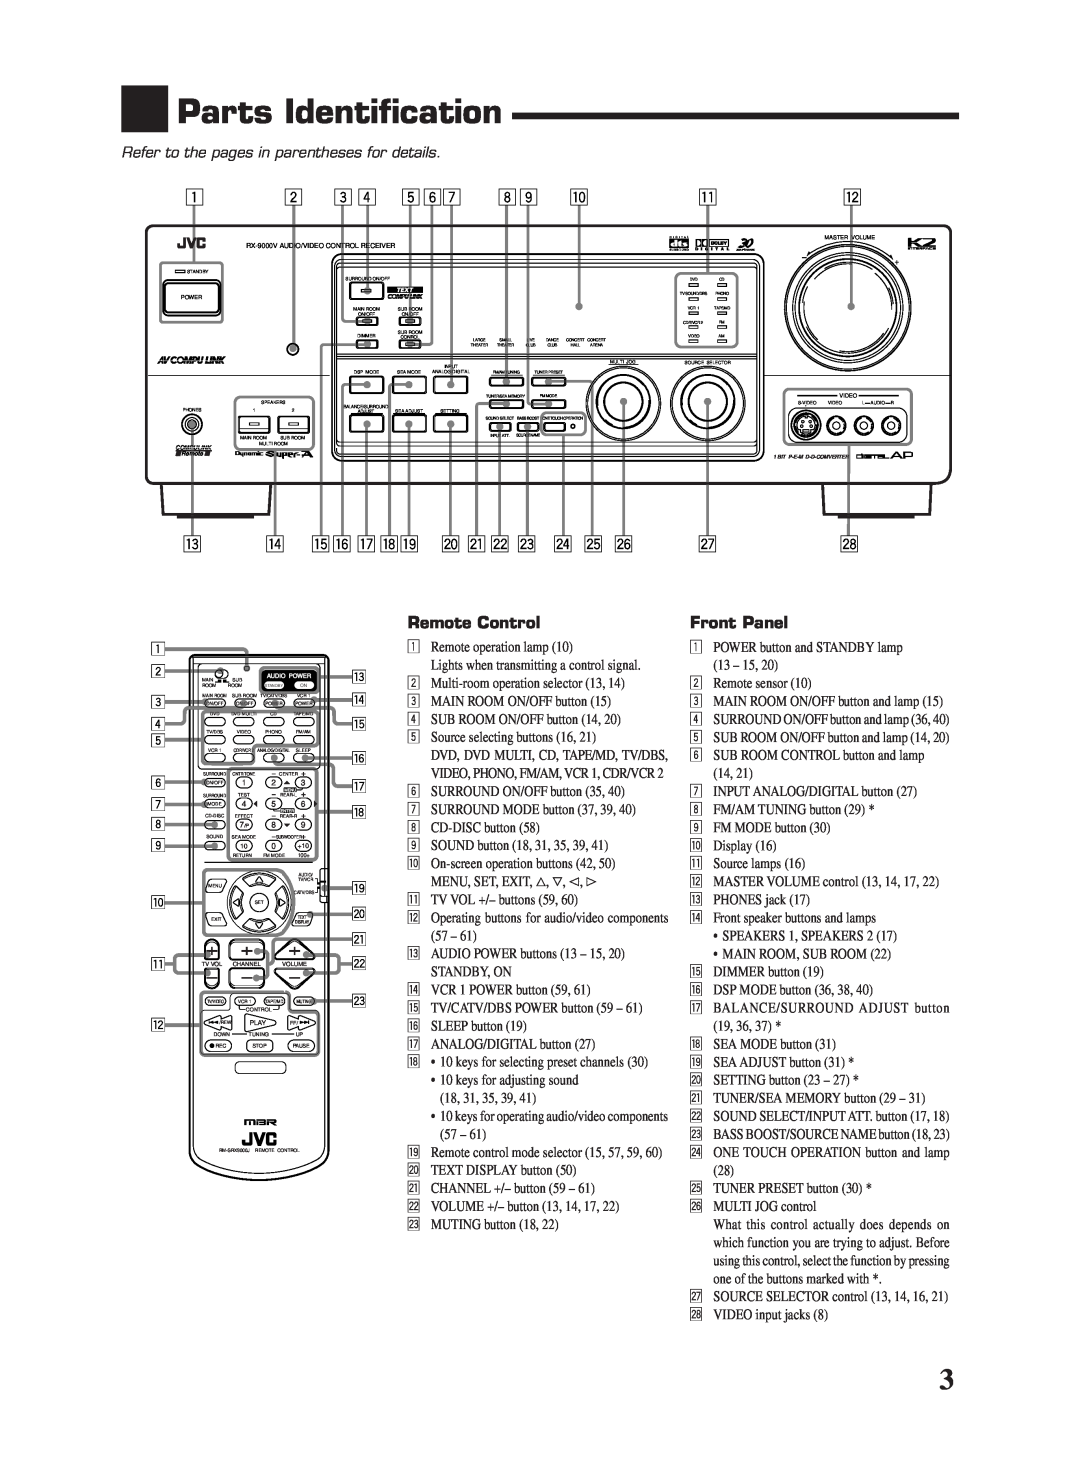 JVC RX-9000VBK manual Parts Identification 